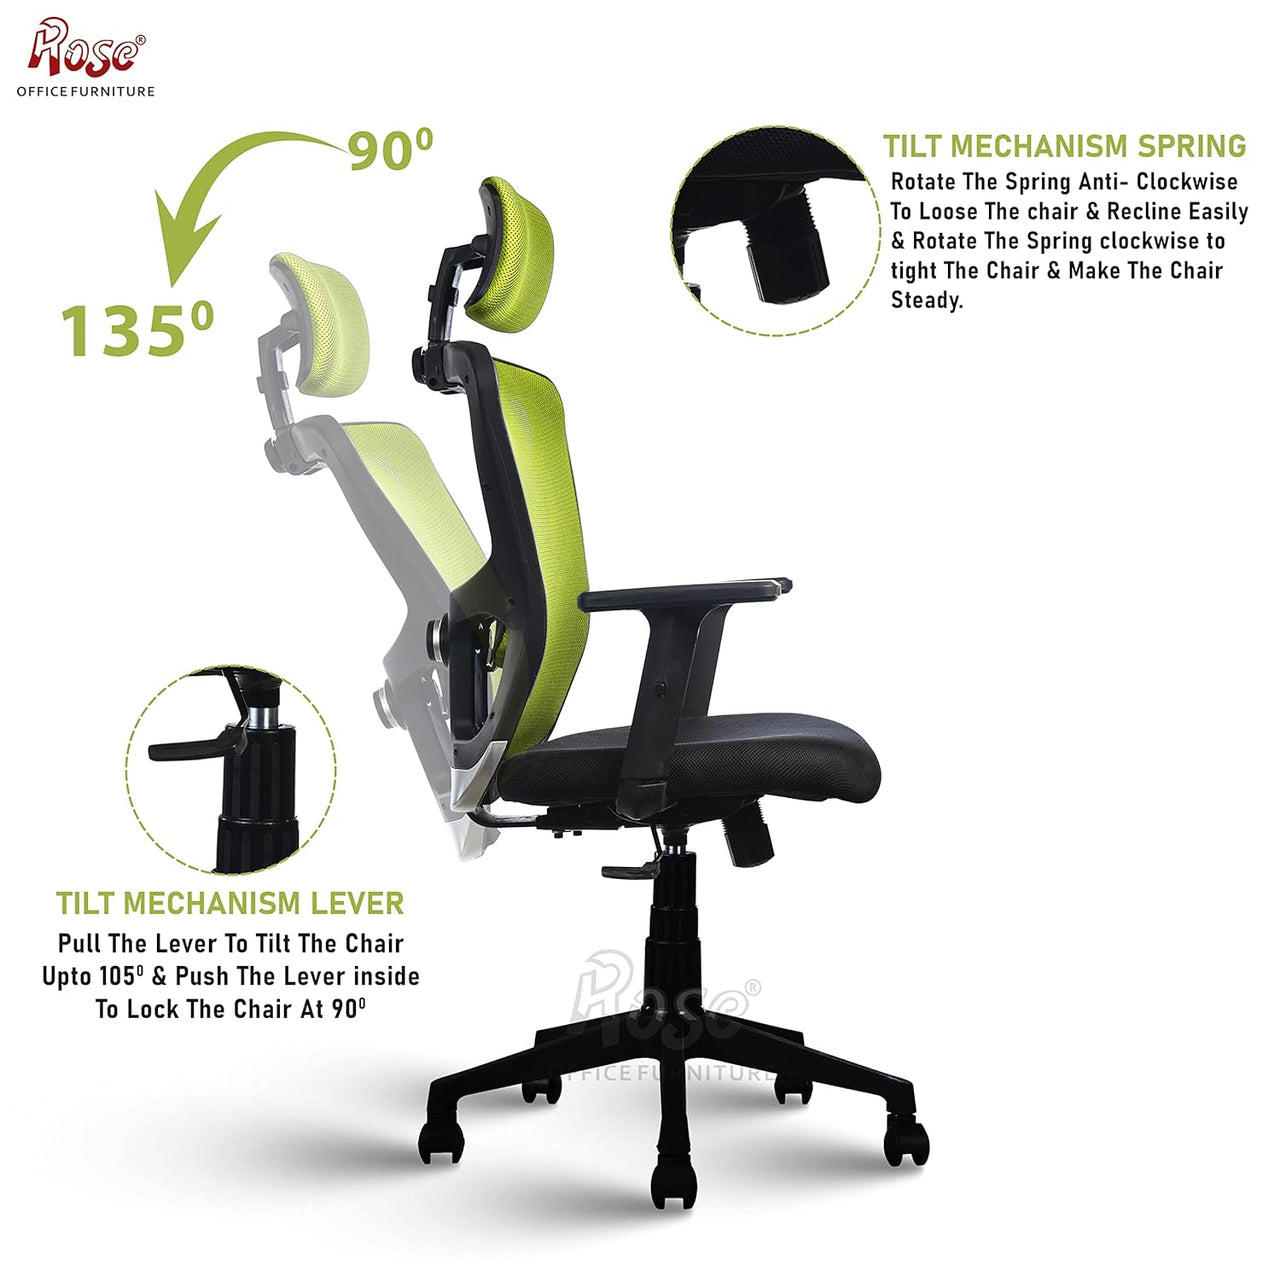 Teesla Mesh High-Back/Mid - Back Ergonomic Office Chair (Green, High Back)